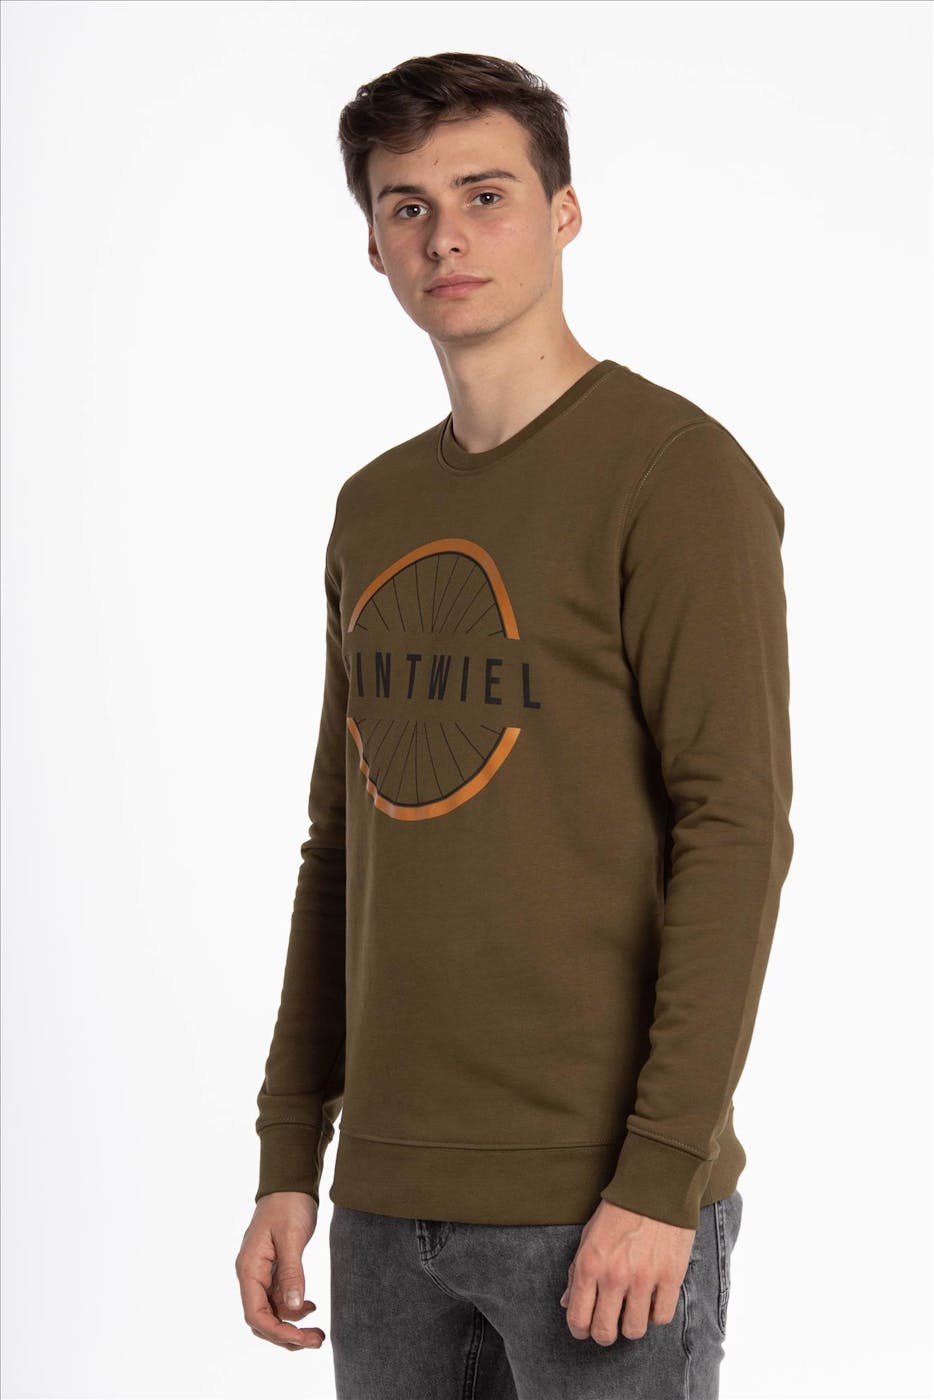 Brooklyn - Intwiel Khaki Logo Wiel sweater